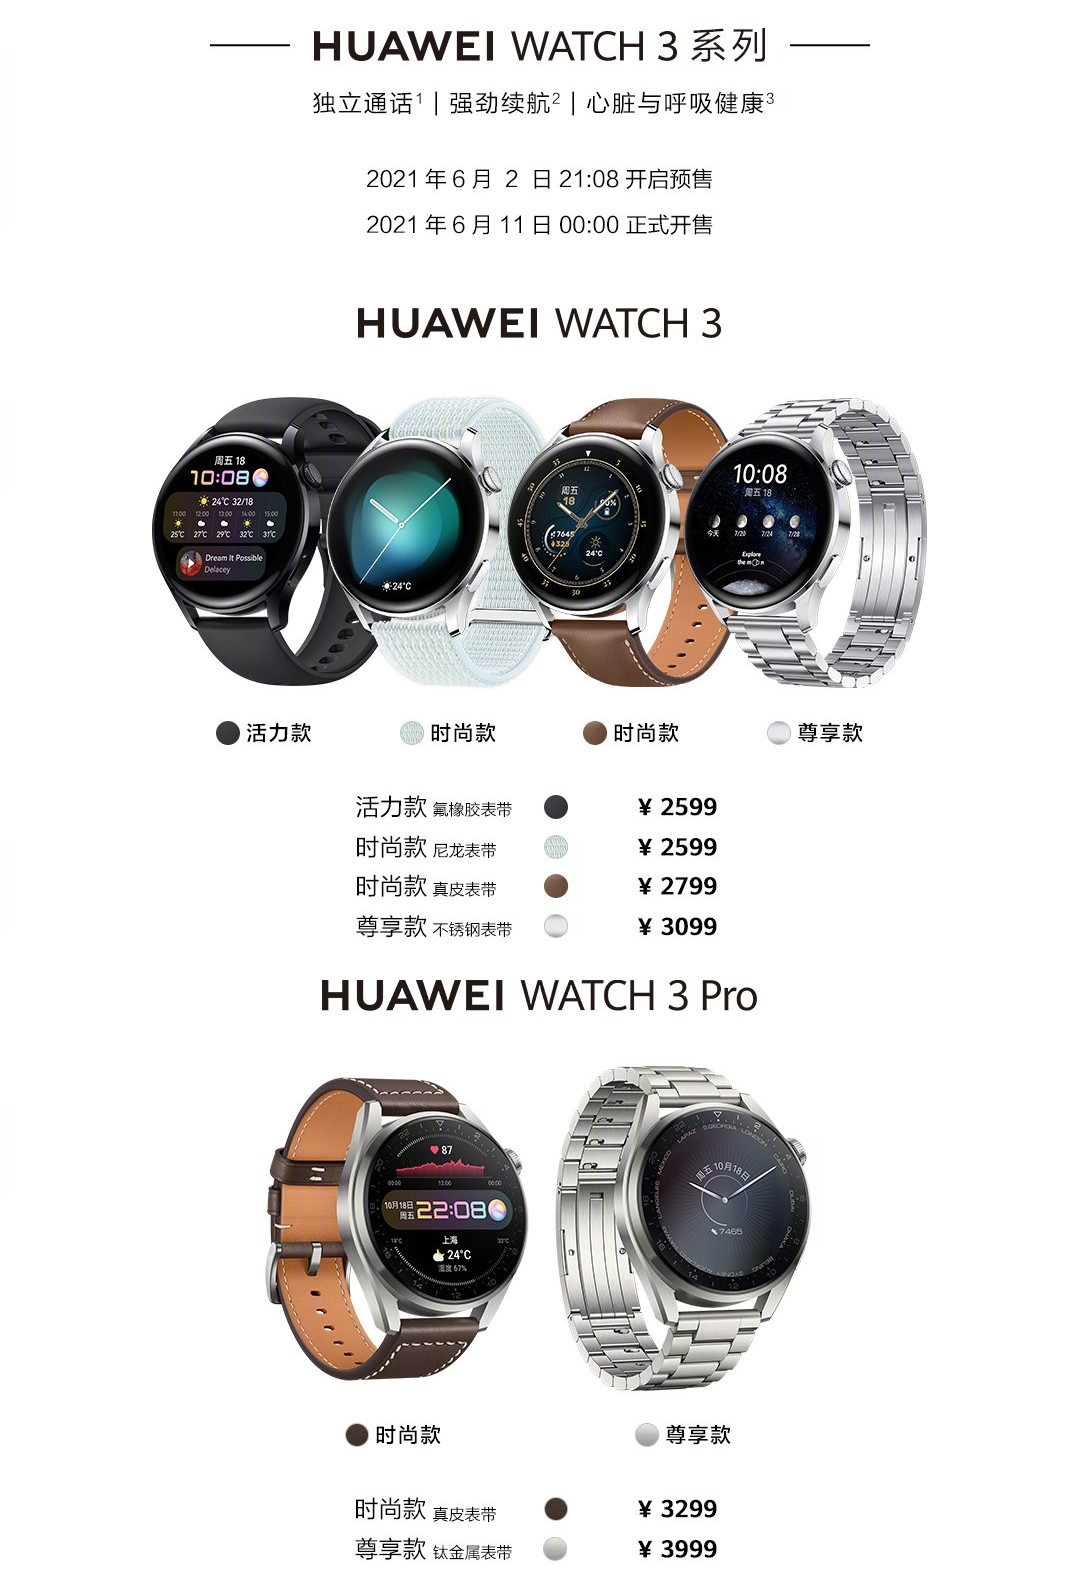 Huawei Watch 3 unveiled with HarmonyOS, eSIM, 3-day battery, 3 Pro follows with titanium body